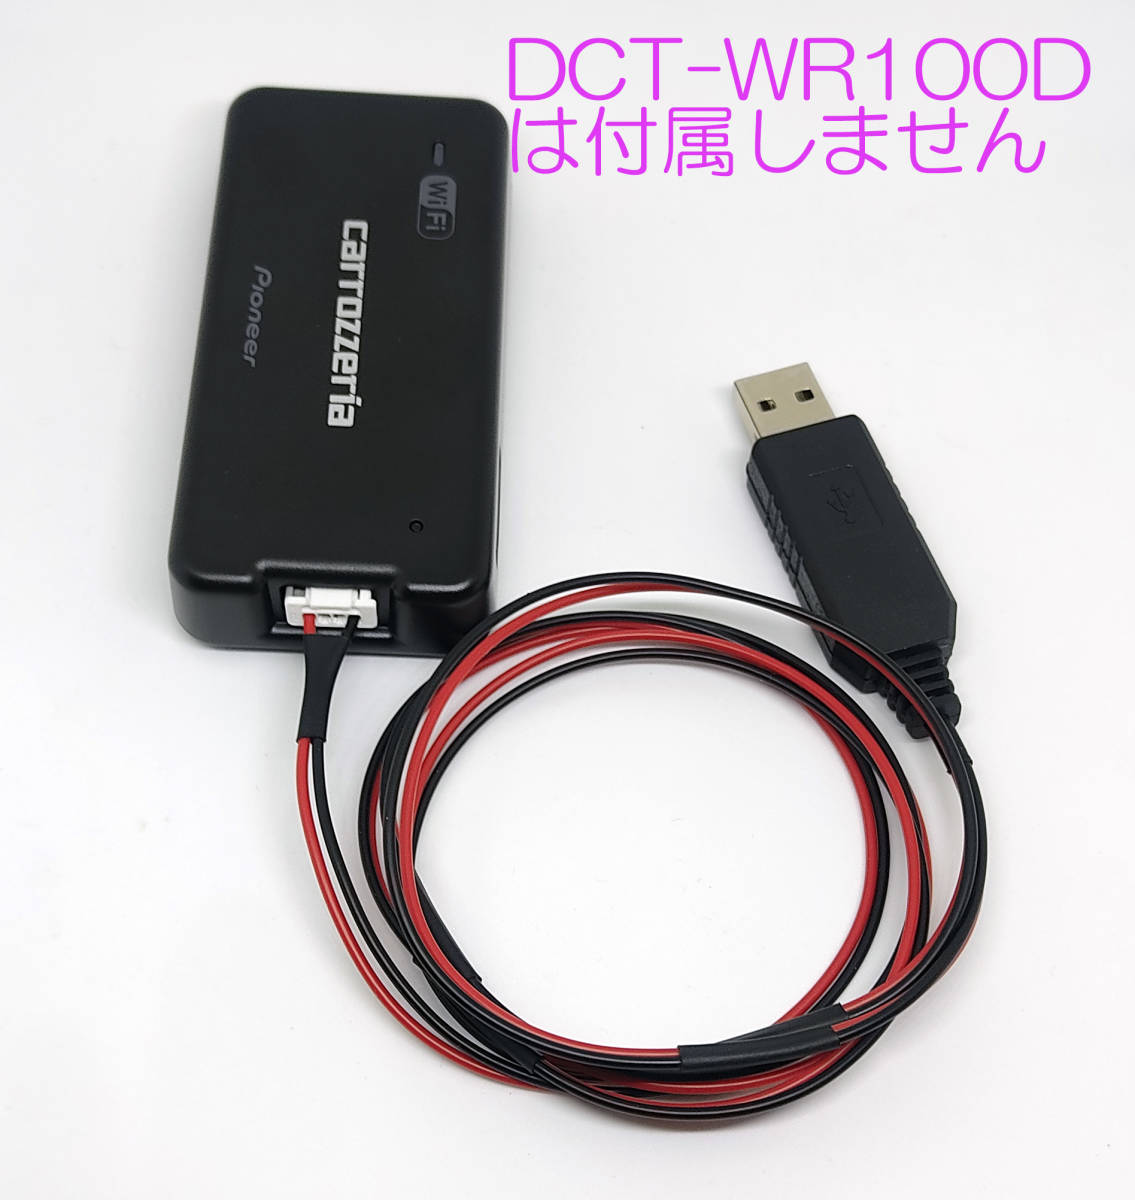 carrozzeria 車載 Wi-Fiルーター DCT-WR100D 用 USB 電源ケーブル 耐熱配線仕様 純正同等部品(コネクタ）モバイルバッテリーで駆動できます_本体DCT-WR100Dは付属しません。